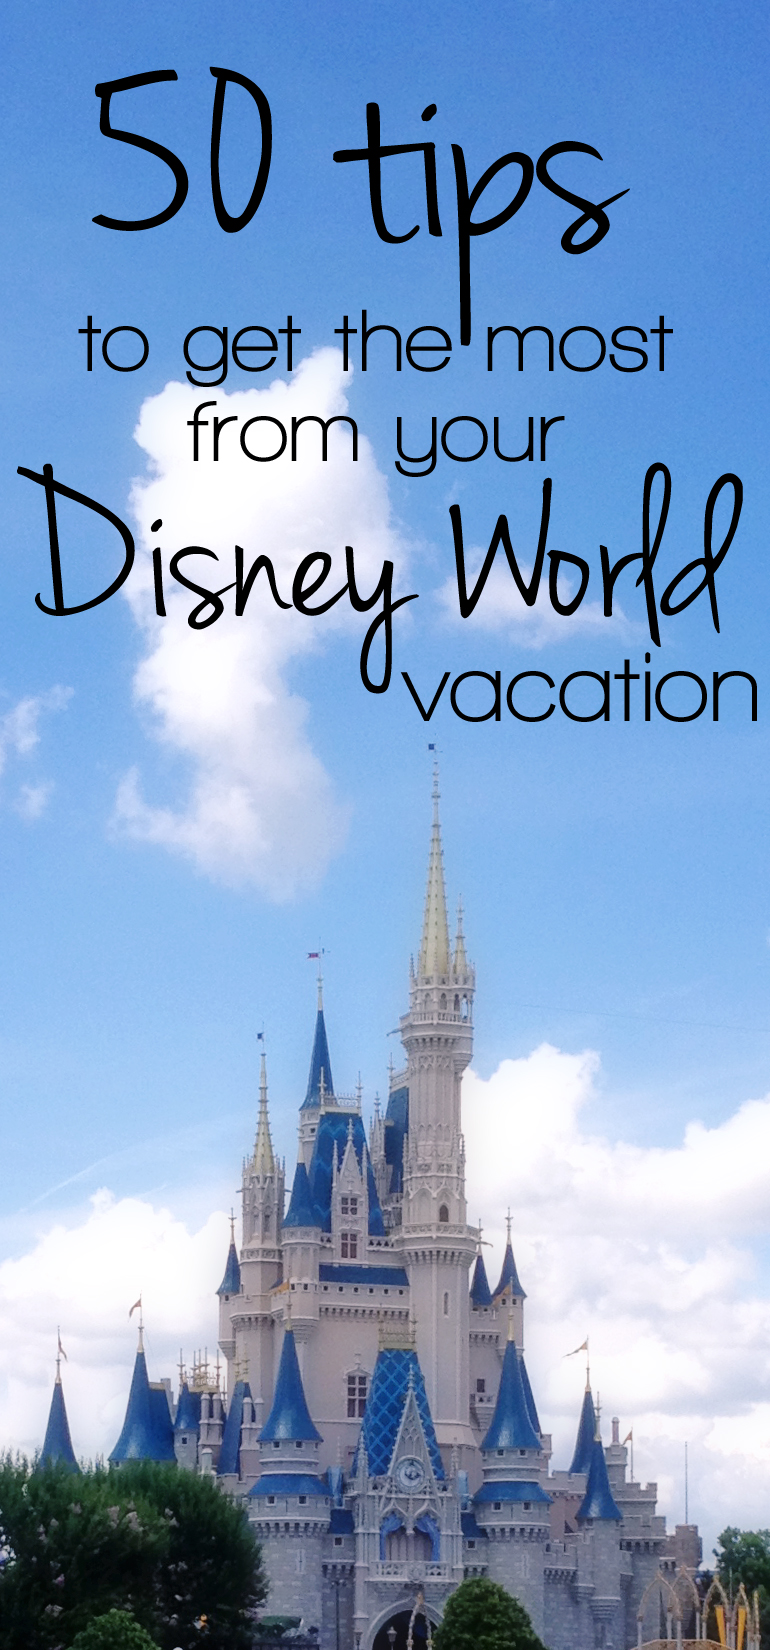 50 Essential Disney World Travel Tips 